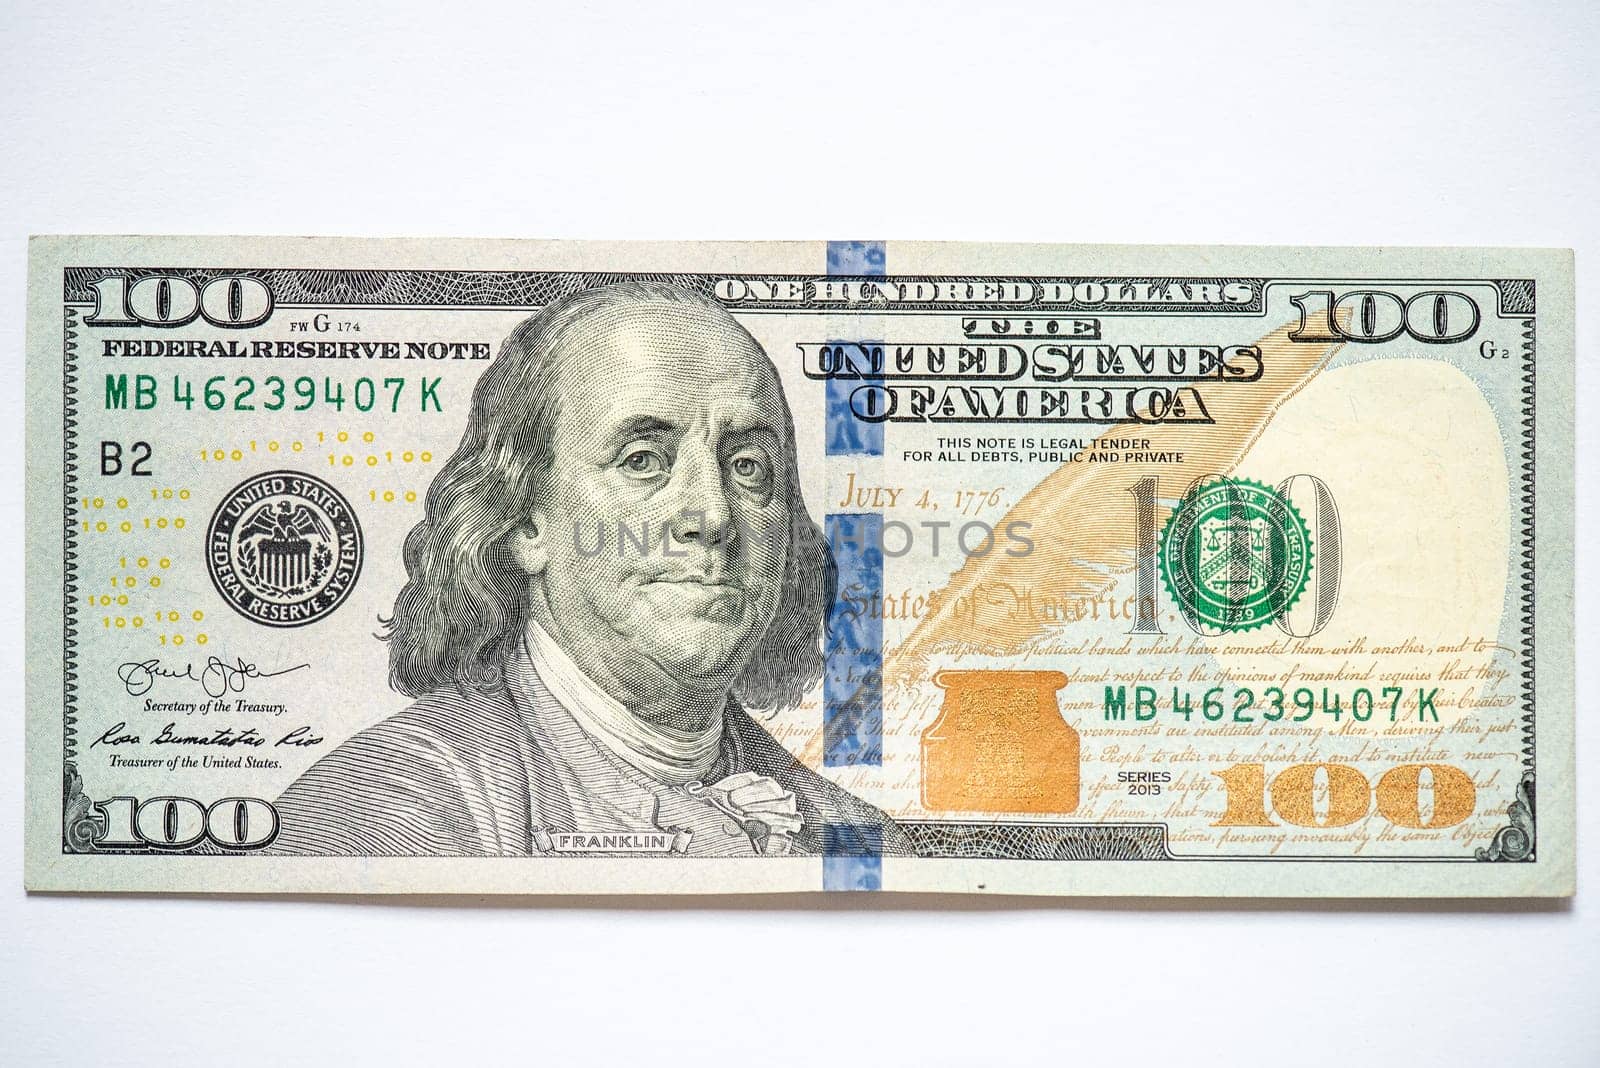 US 100 dollars banknote on white background by OleksandrLipko